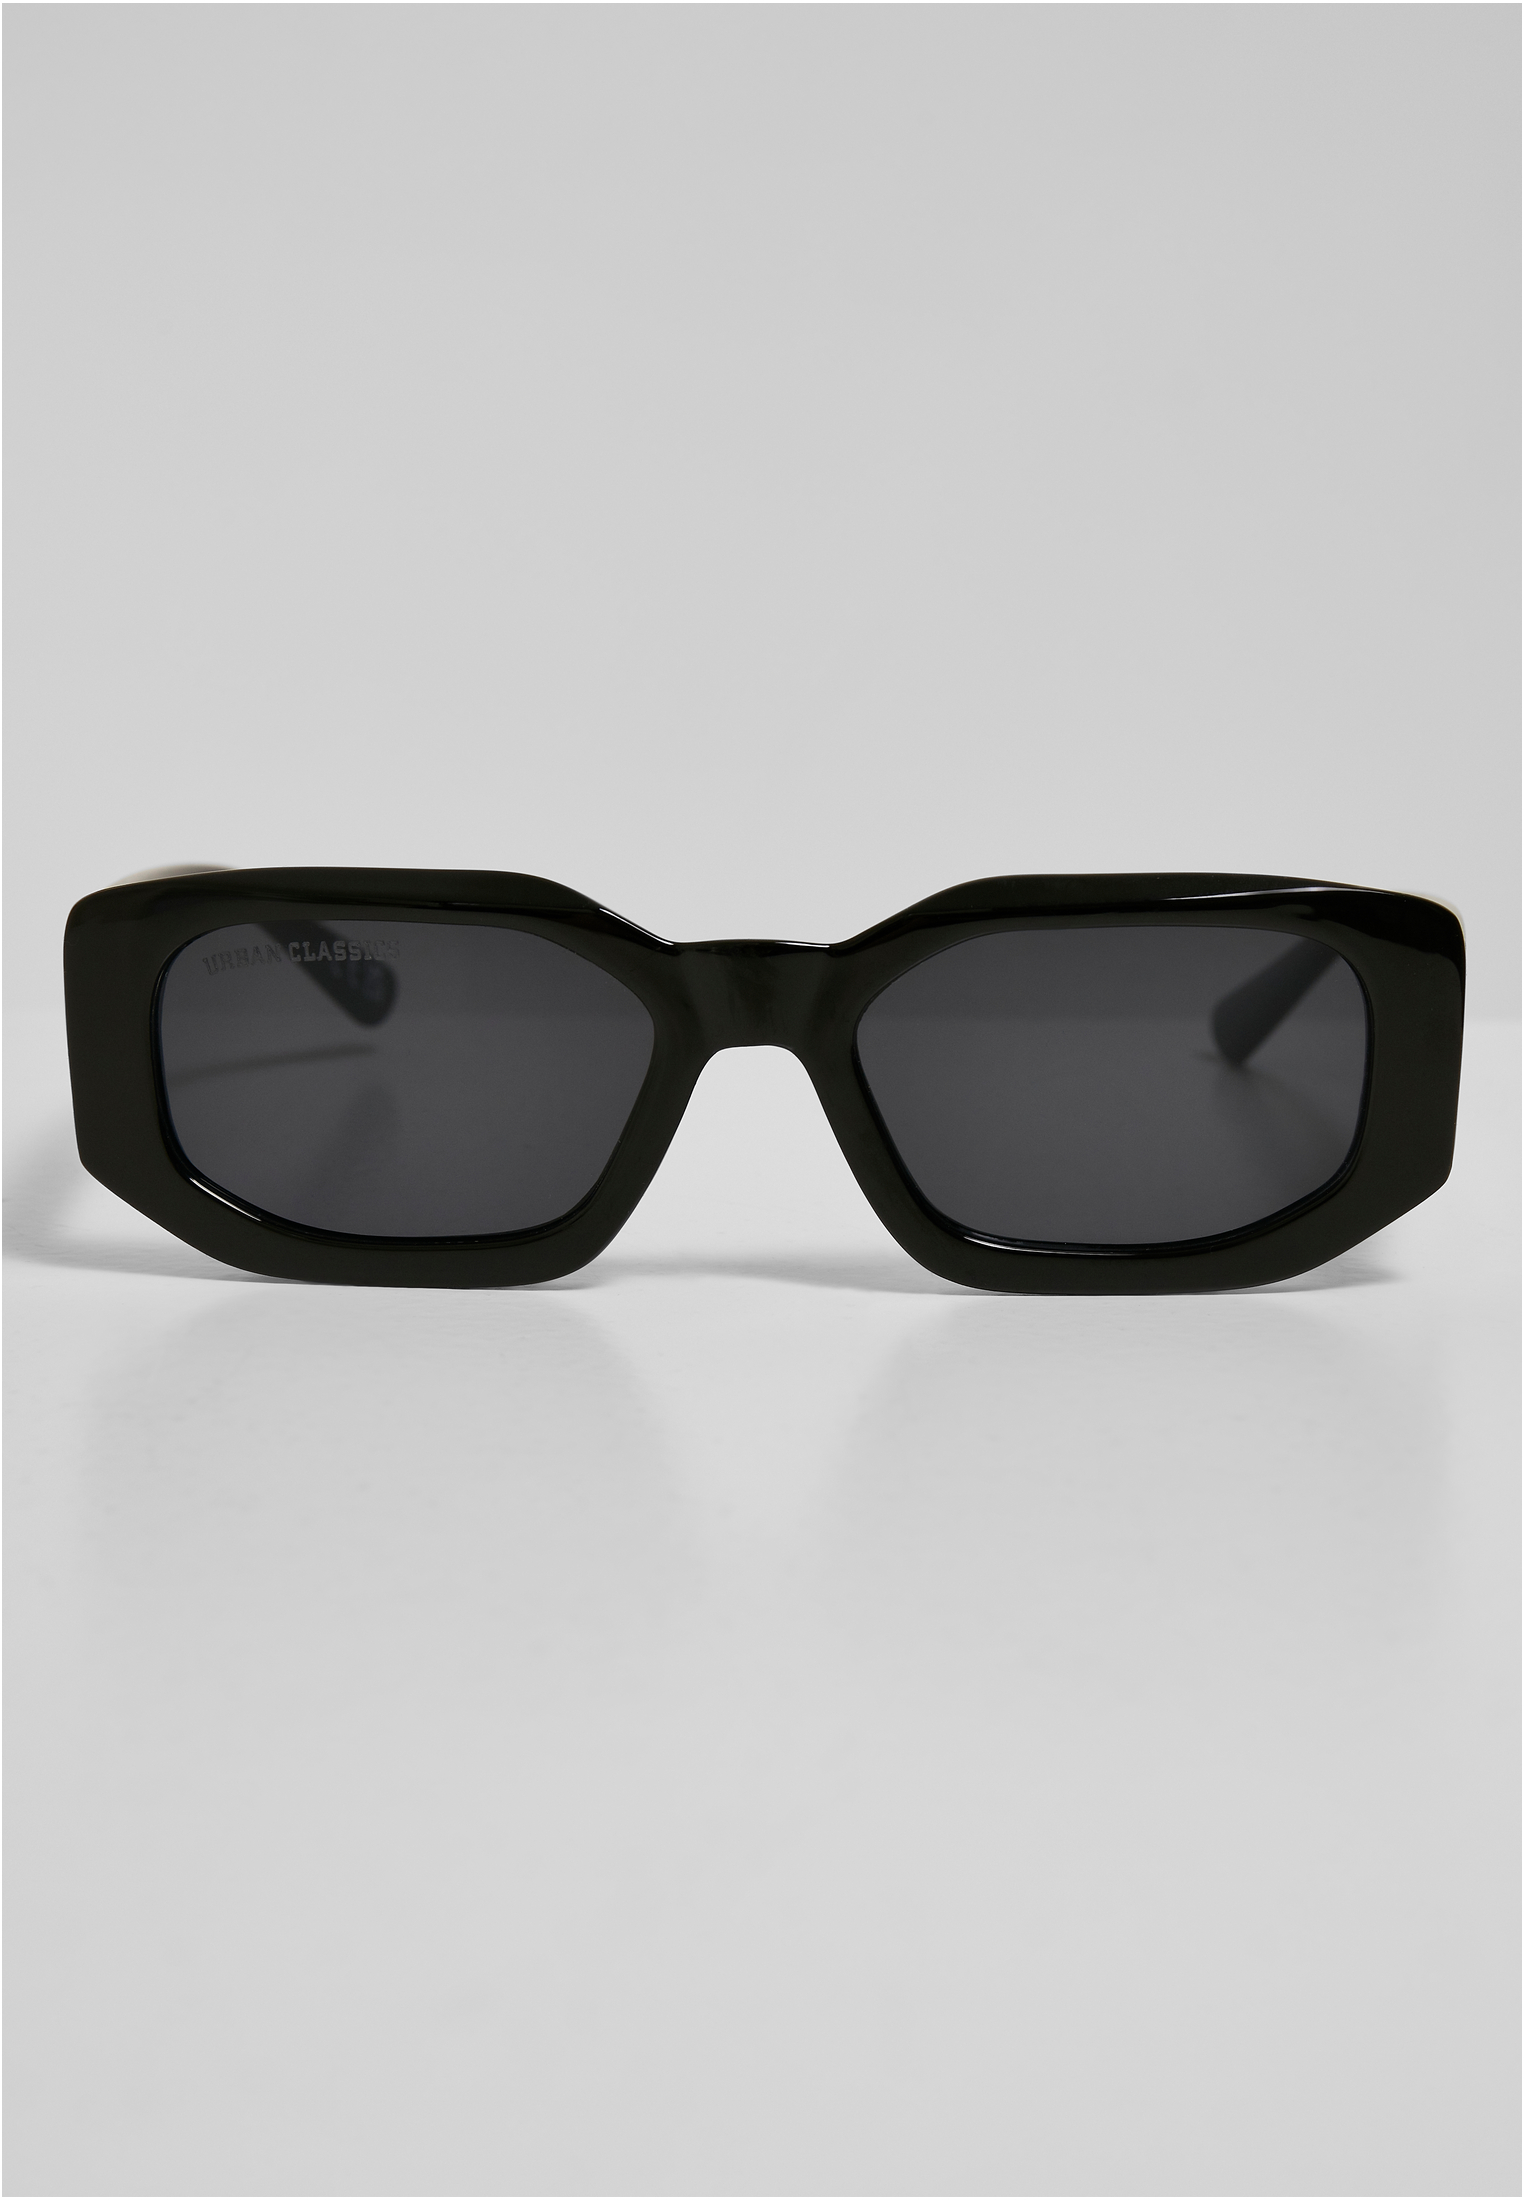 Sunglasses Santa Rosa-TB5202